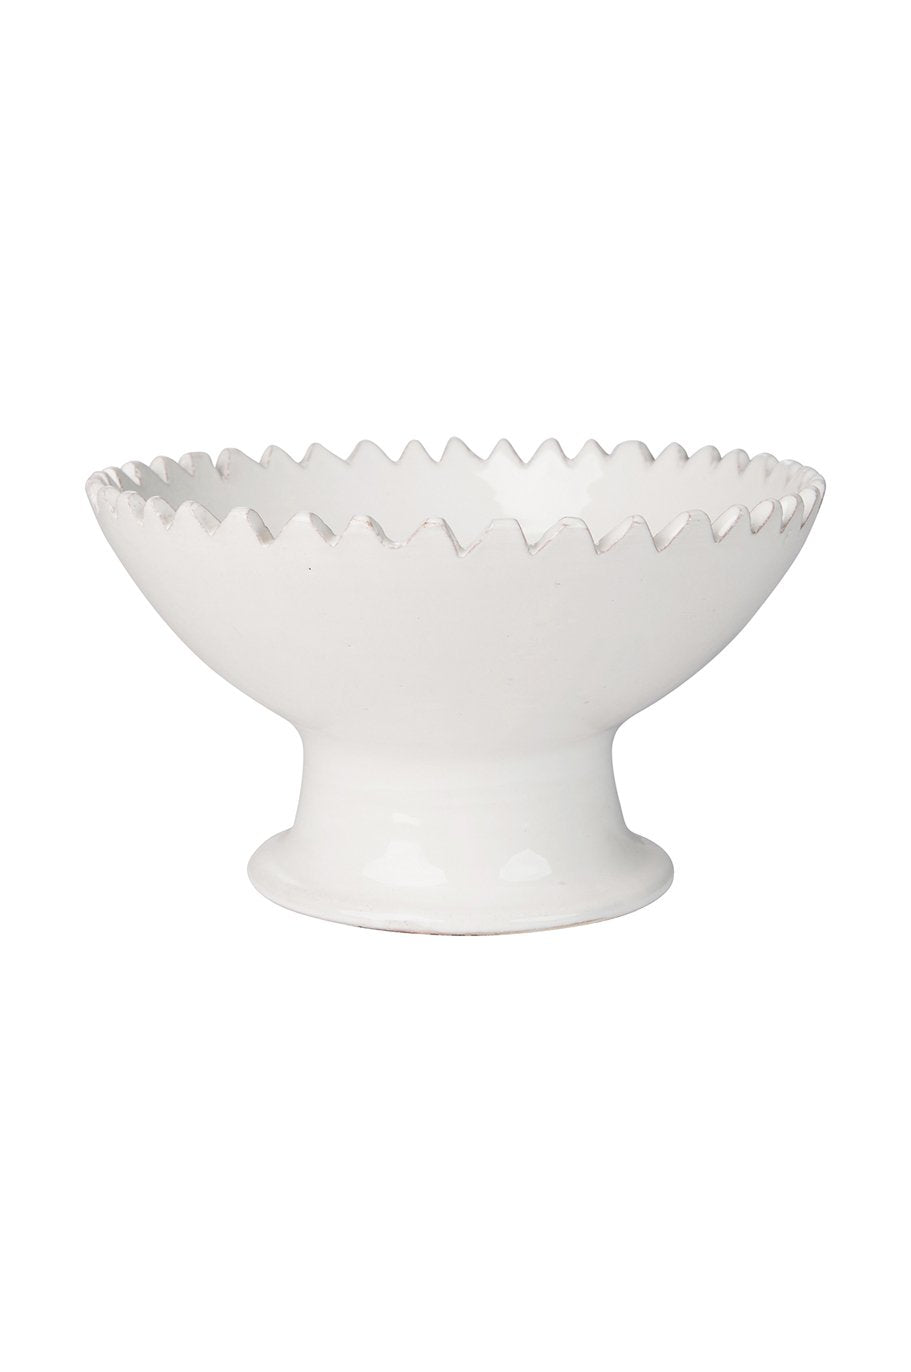 Moroccan White Zigzag Pedestal Bowl Bohzali nz